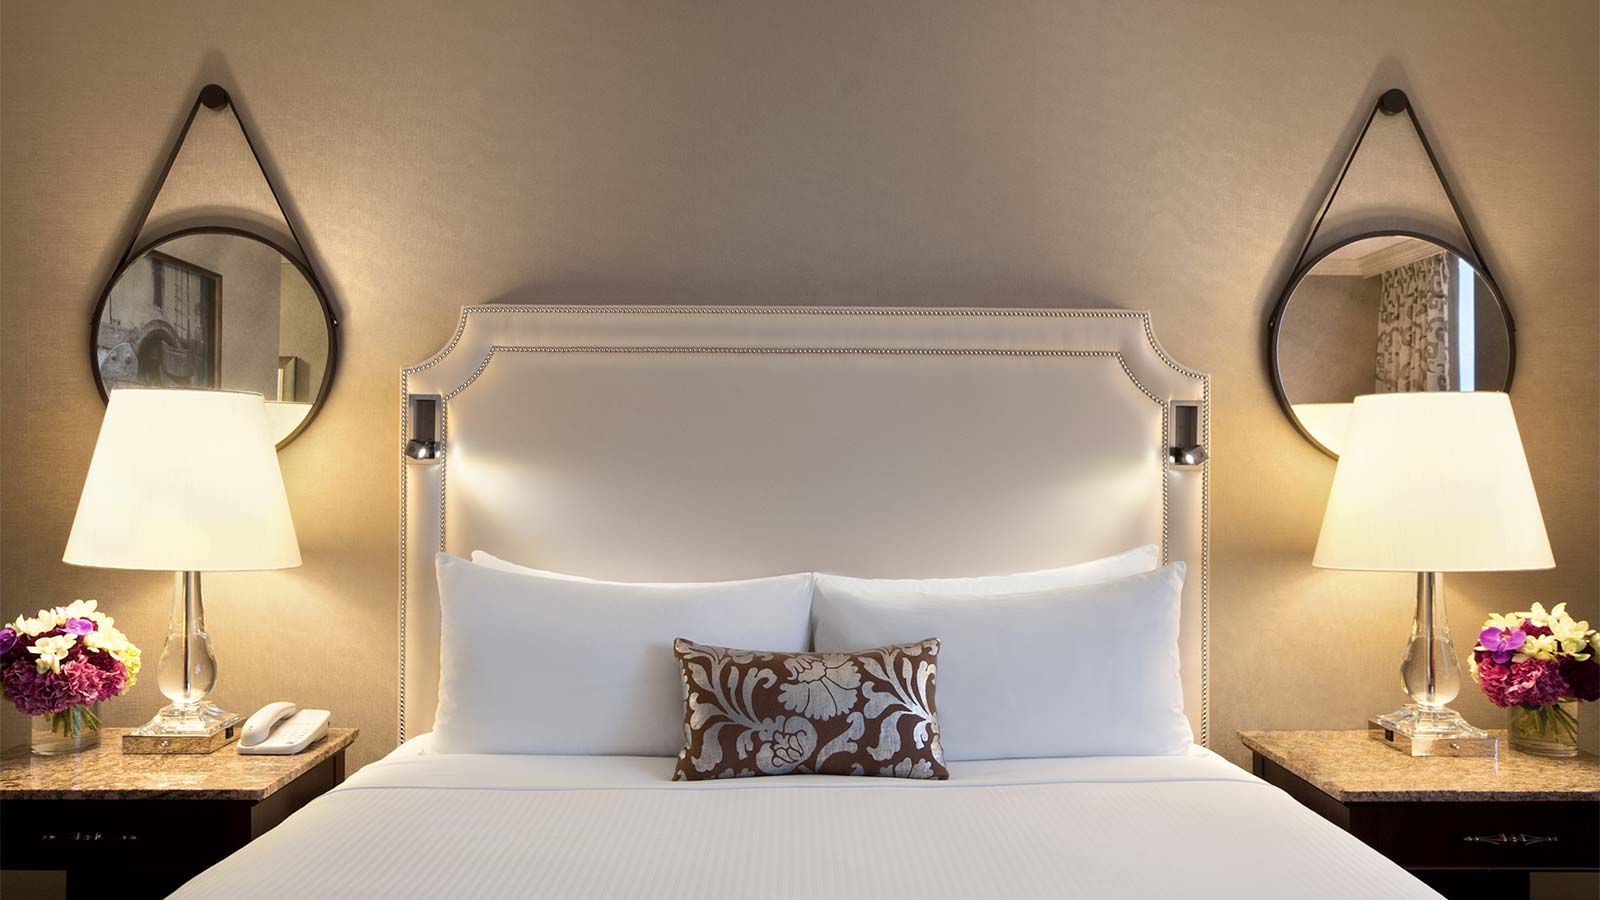 fairmont hotel pillows canada